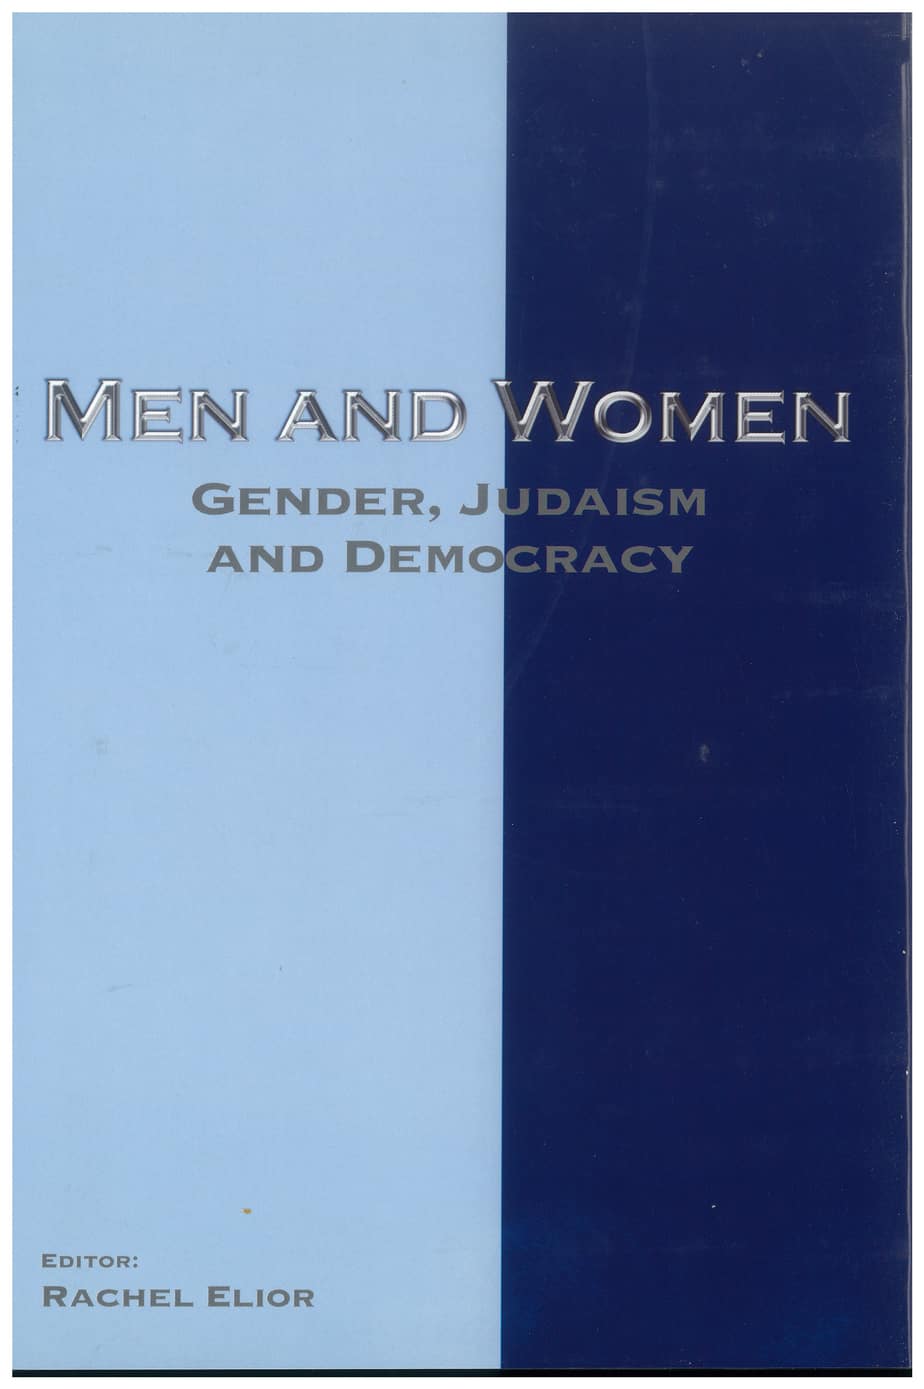 Men and Women: Gender, Judaism and Democracy